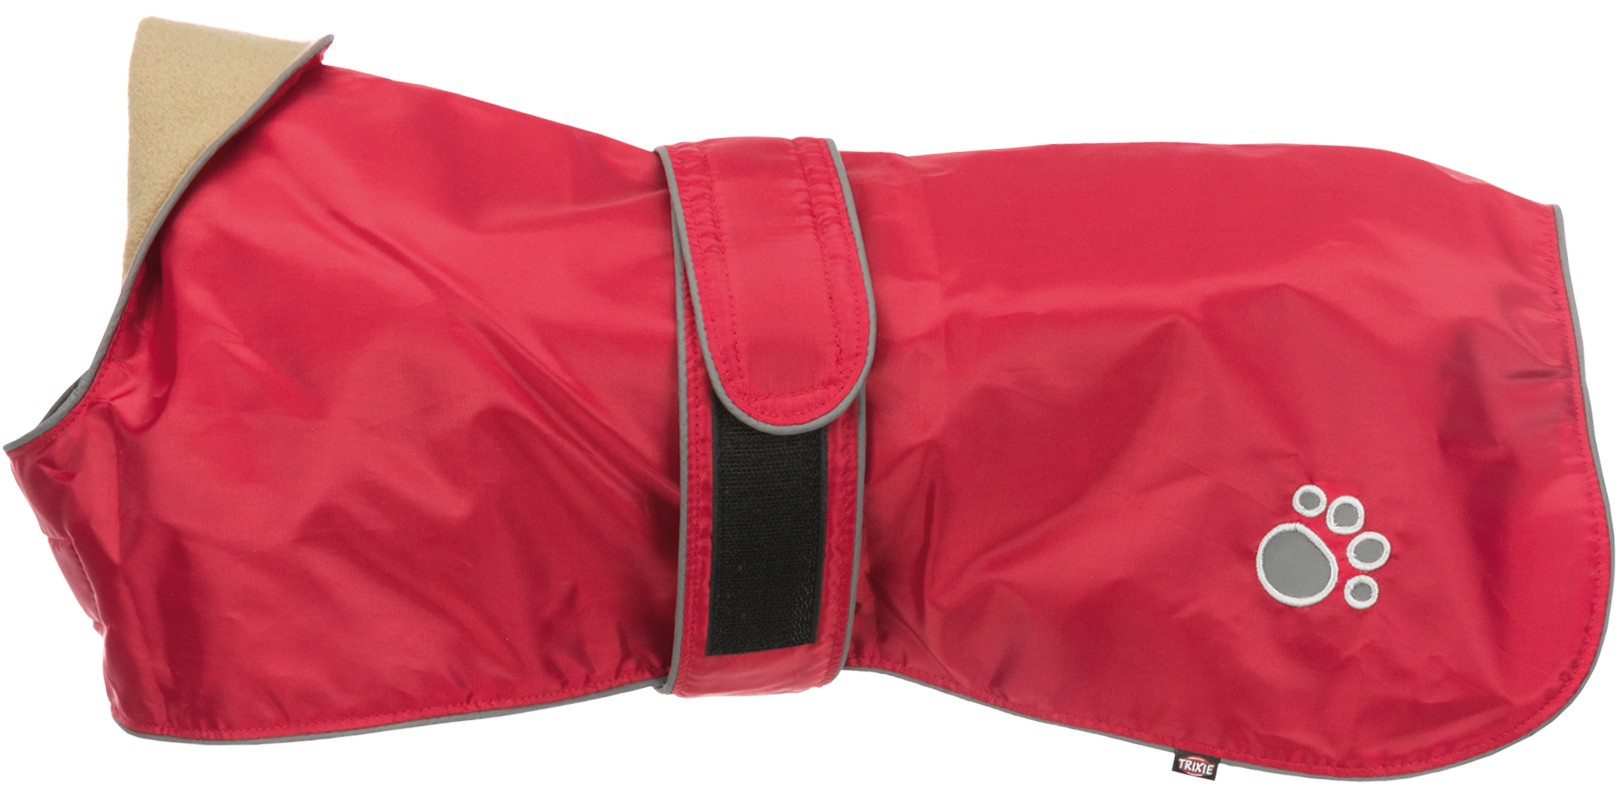 Capa impermeable para perros Orléans rojo - varias tallas disponibles